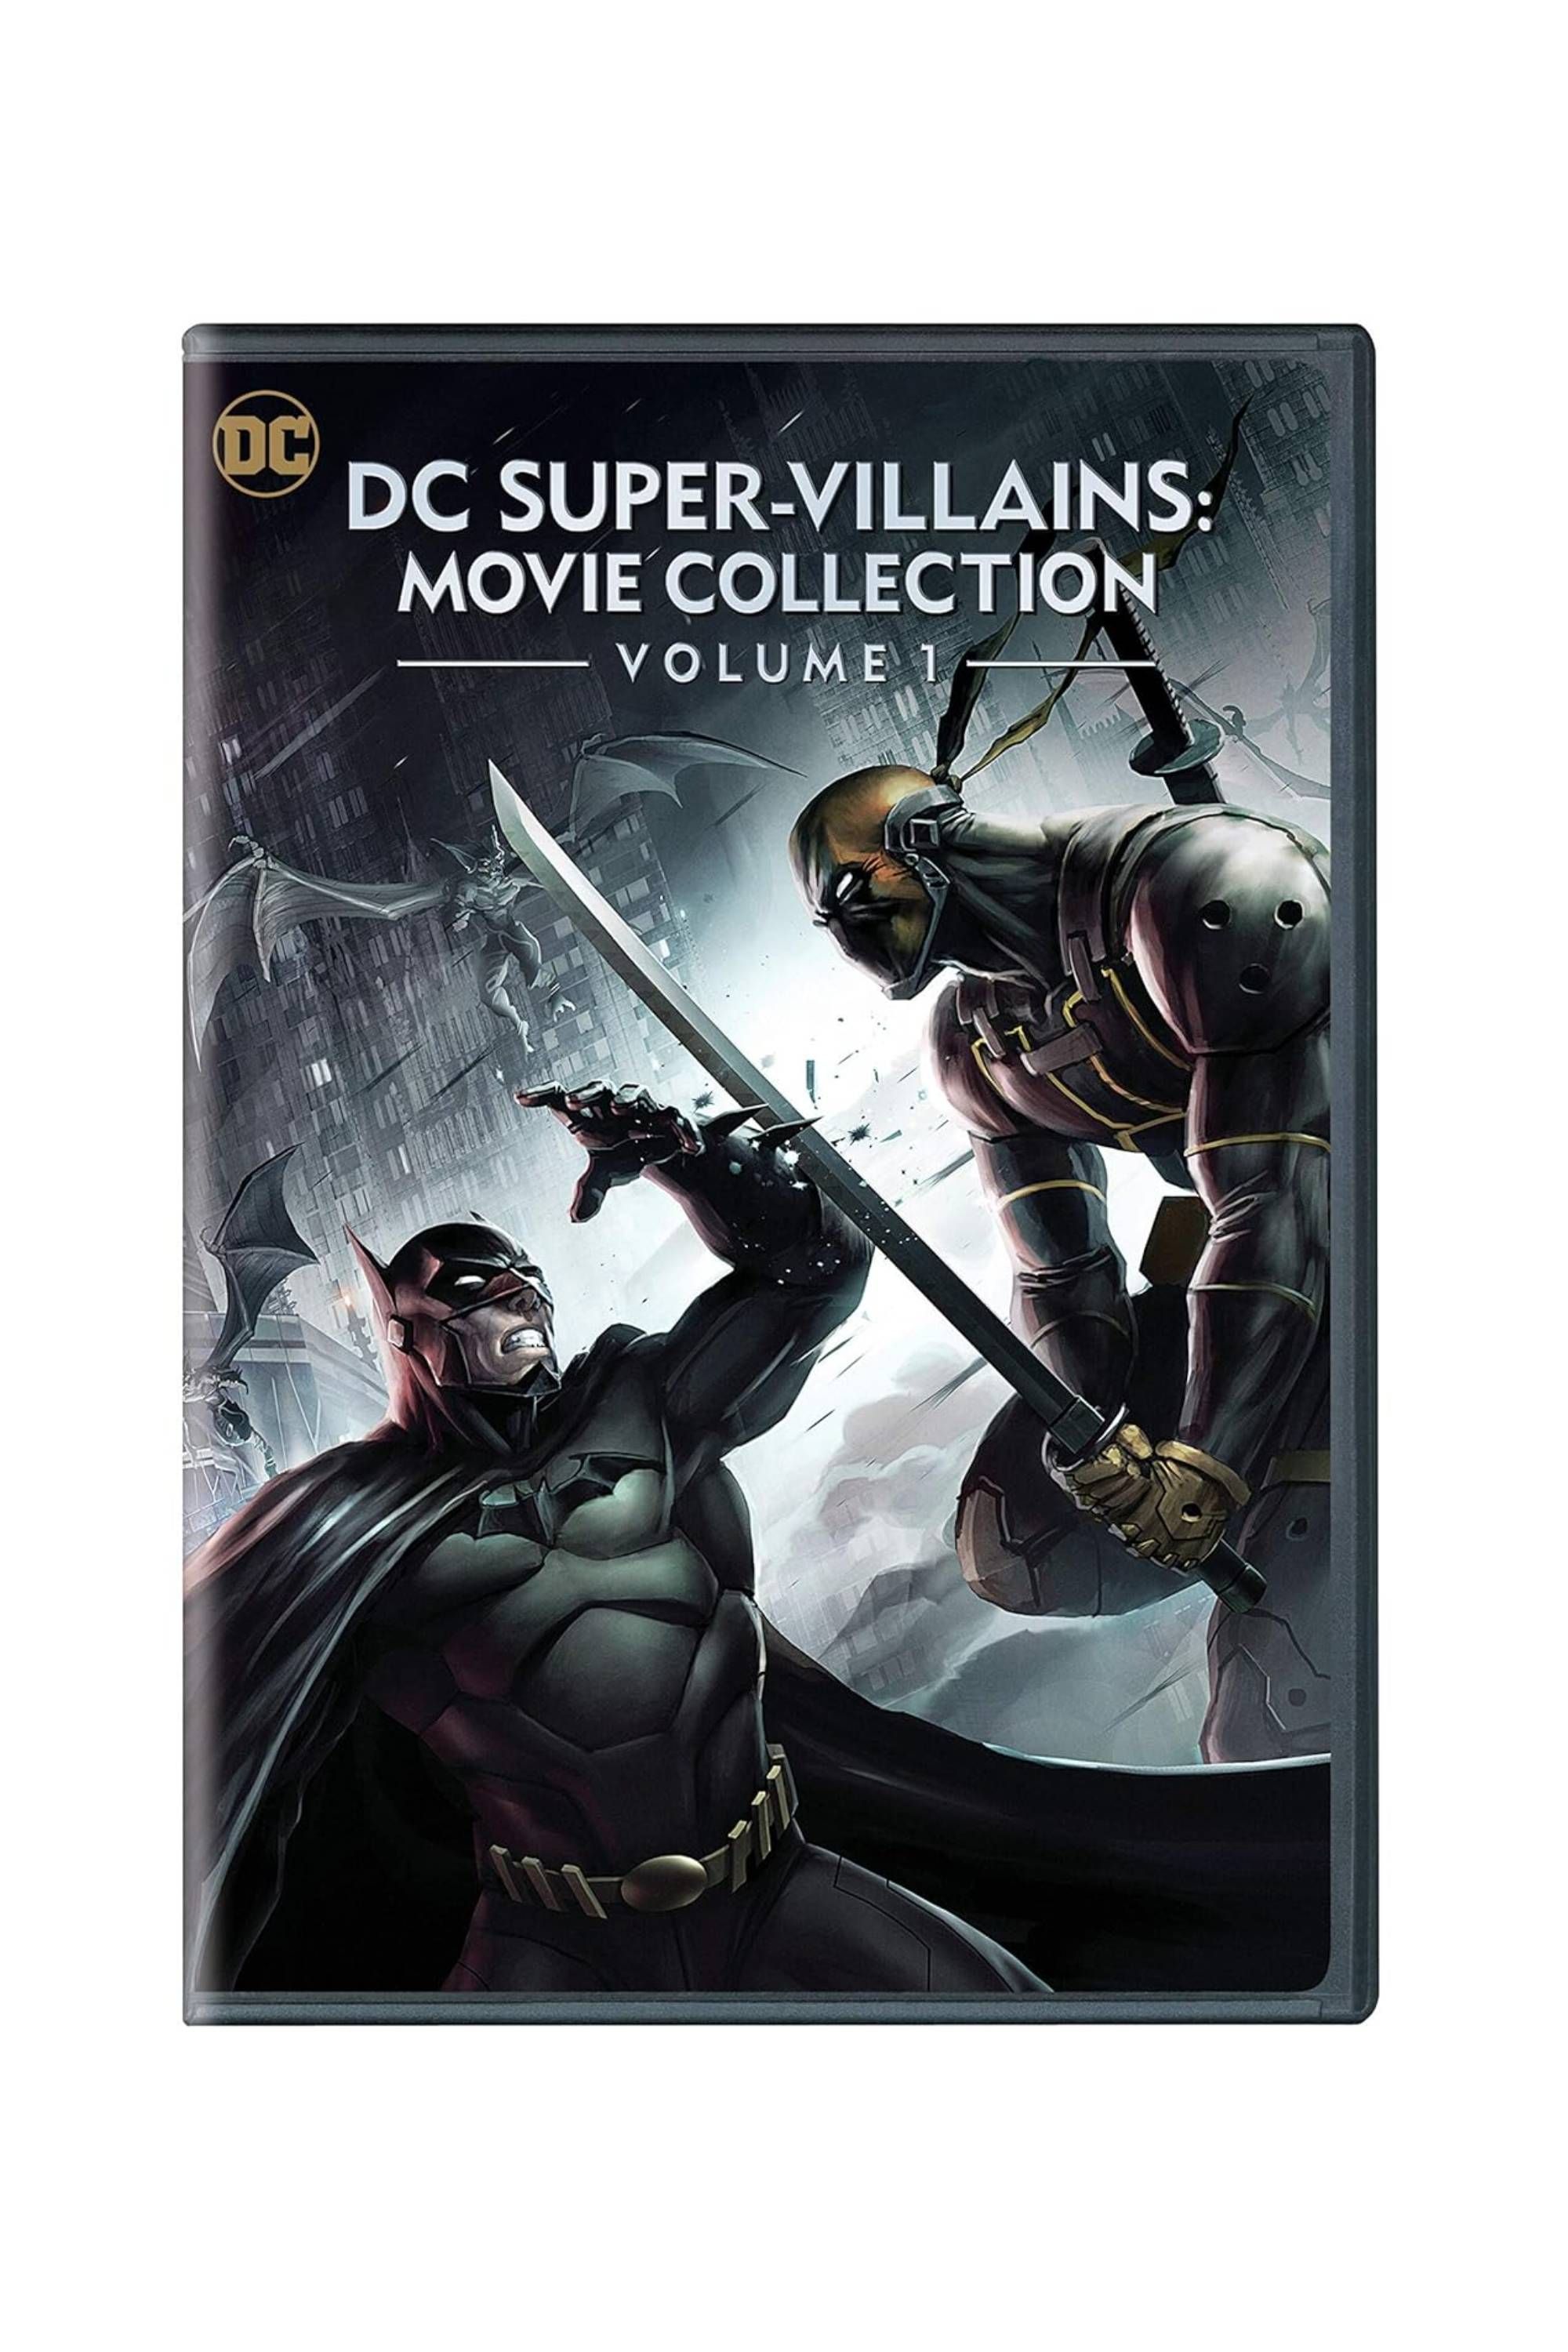 DC Super-Villains_ Movie Collection Volume 1 DVD Cover